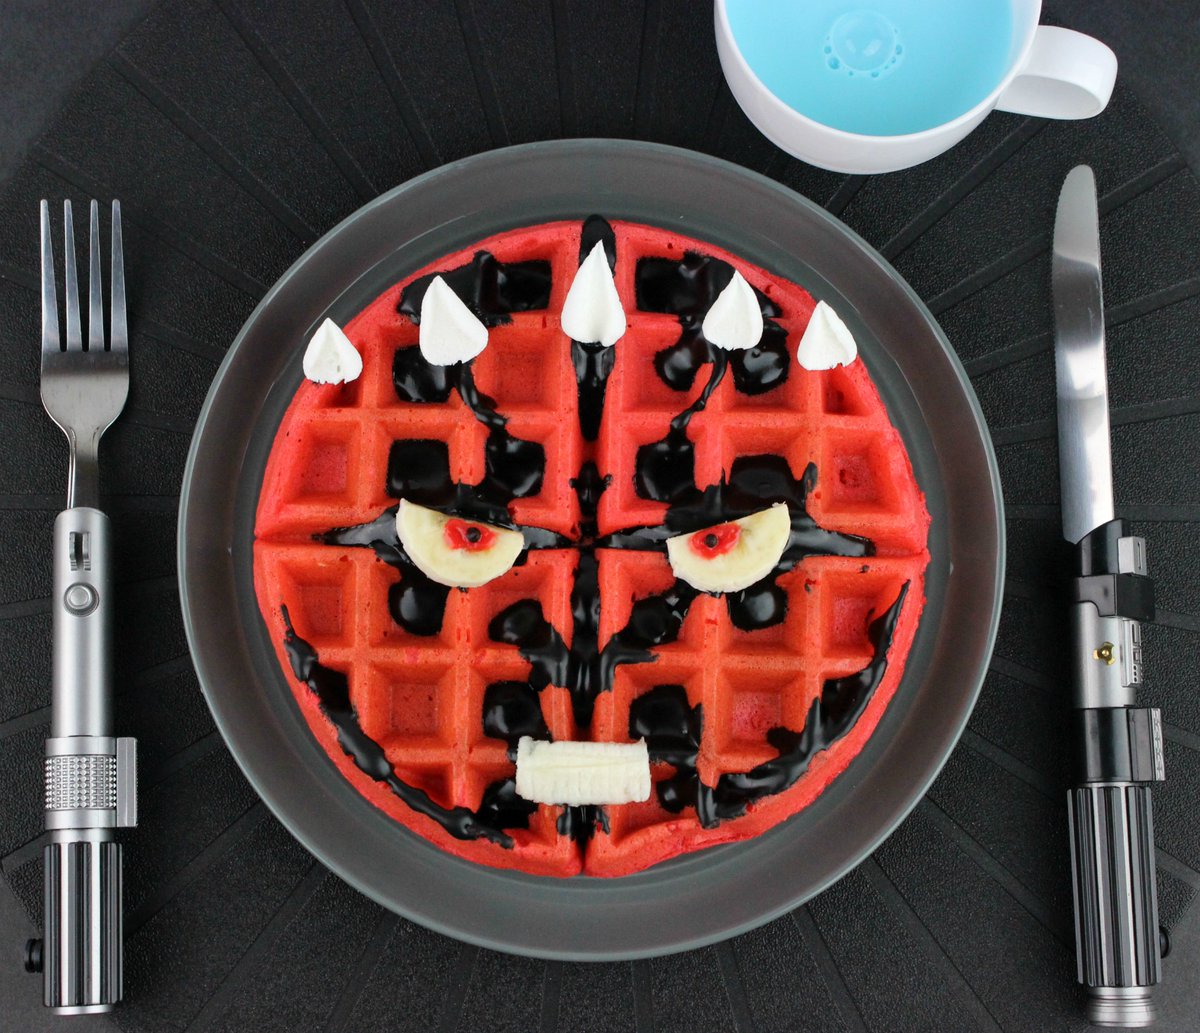 Darth Maul-ffles will make your breakfast dark-side-delicious on #NationalWaffleDay. strw.rs/6001M1MZL